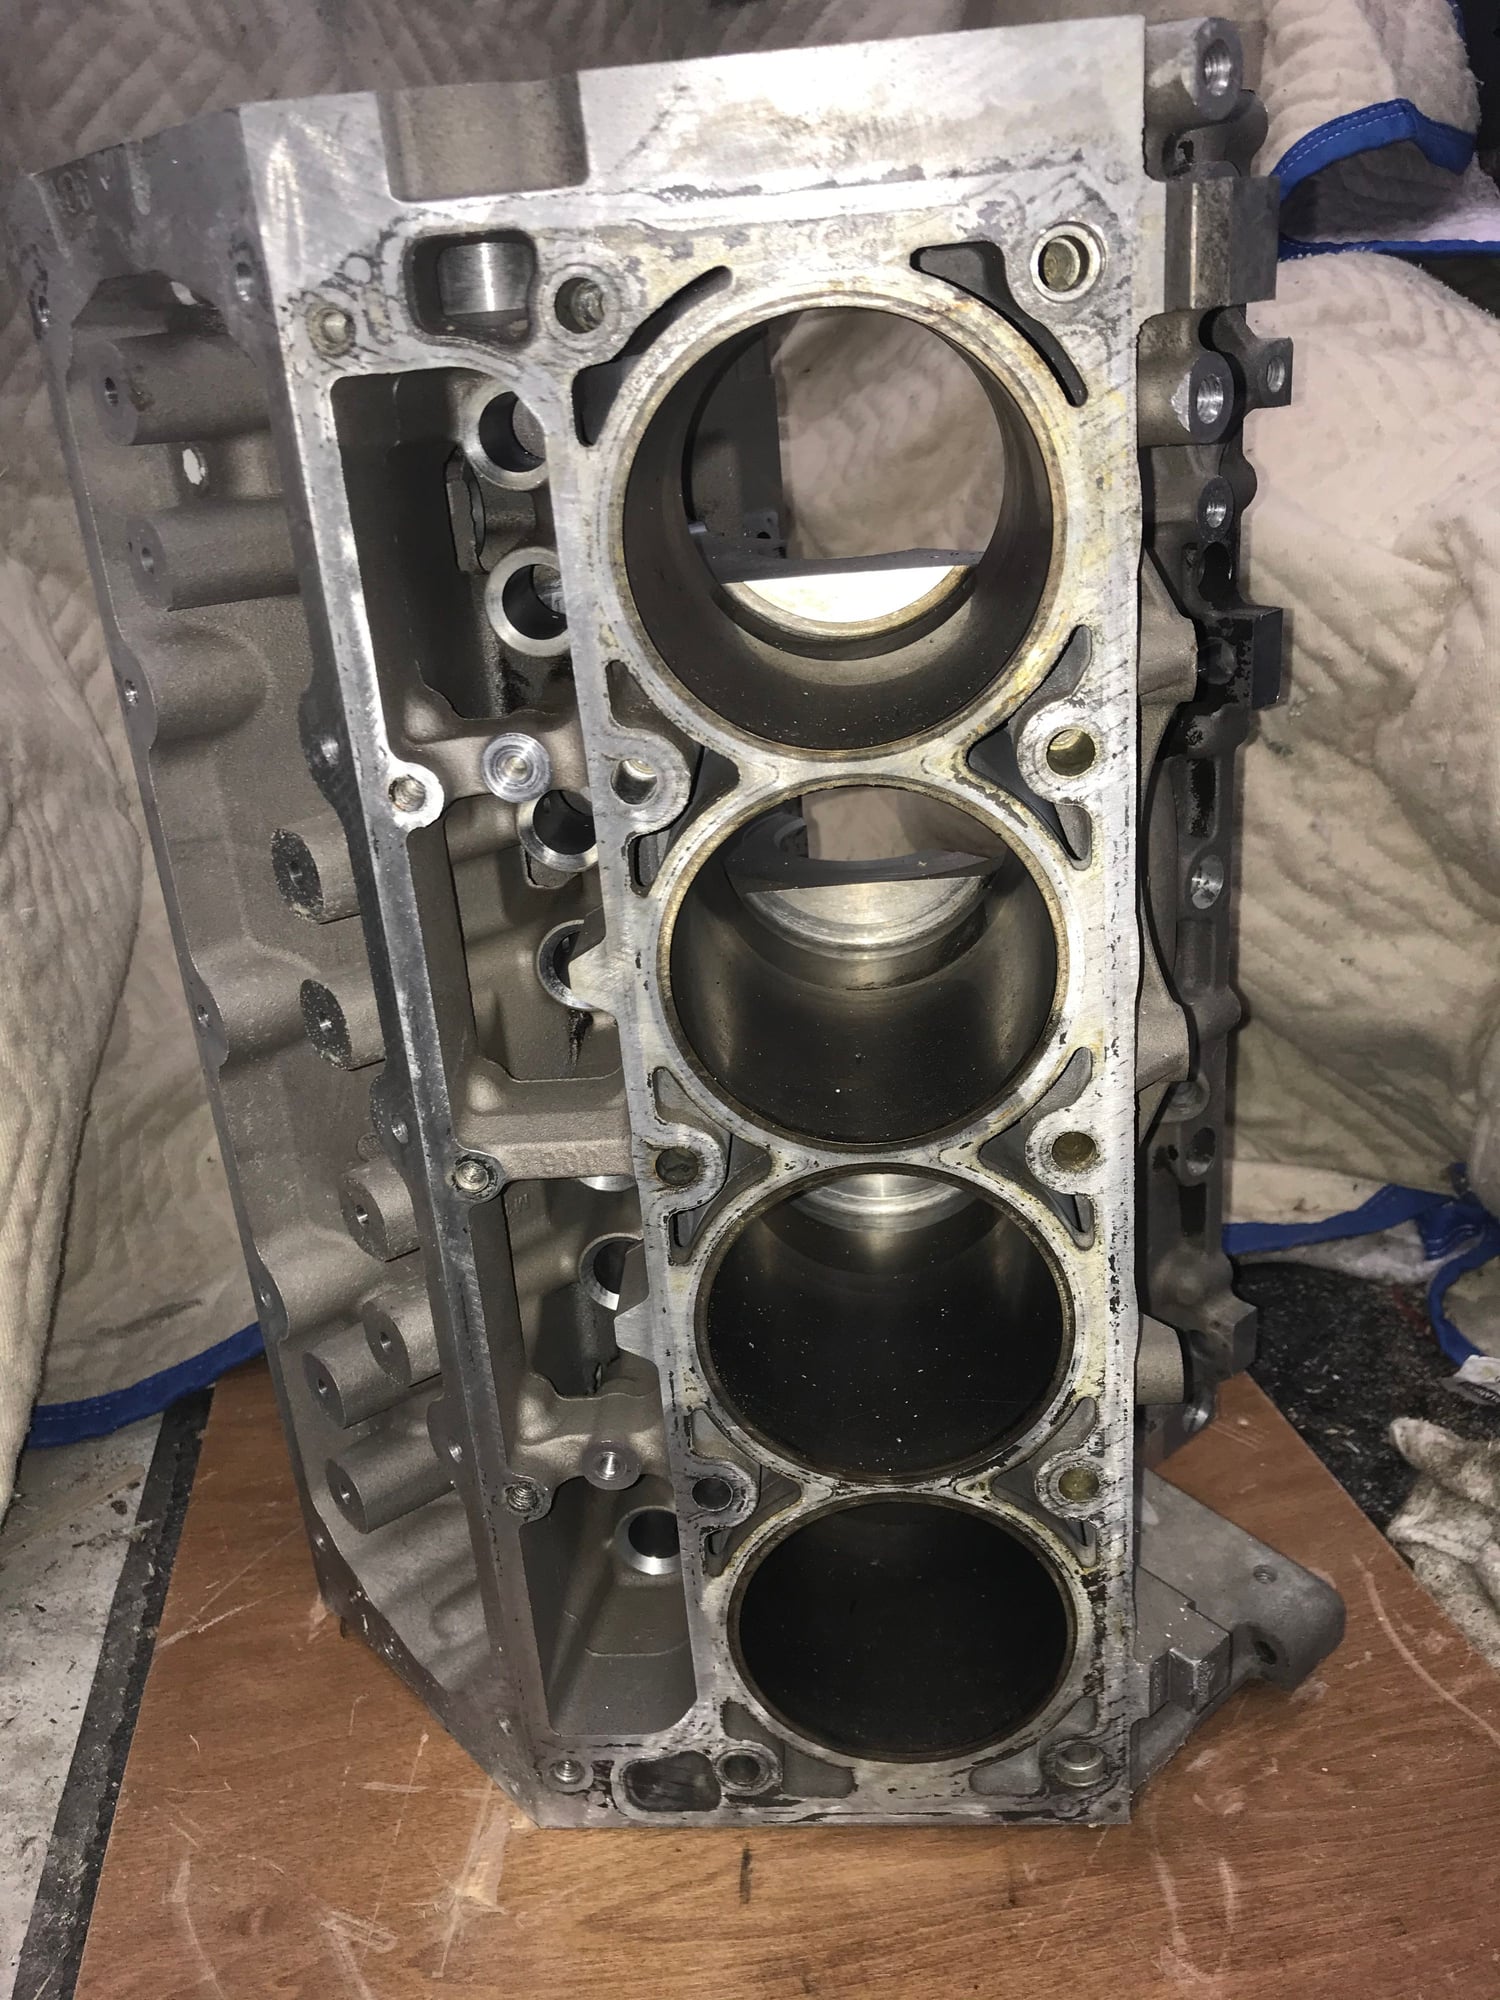 Engine - Internals - L76 Gen IV 6.0 Std aluminum Block - Used - 2007 to 2013 Chevrolet Silverado 1500 - Waco, TX 76712, United States